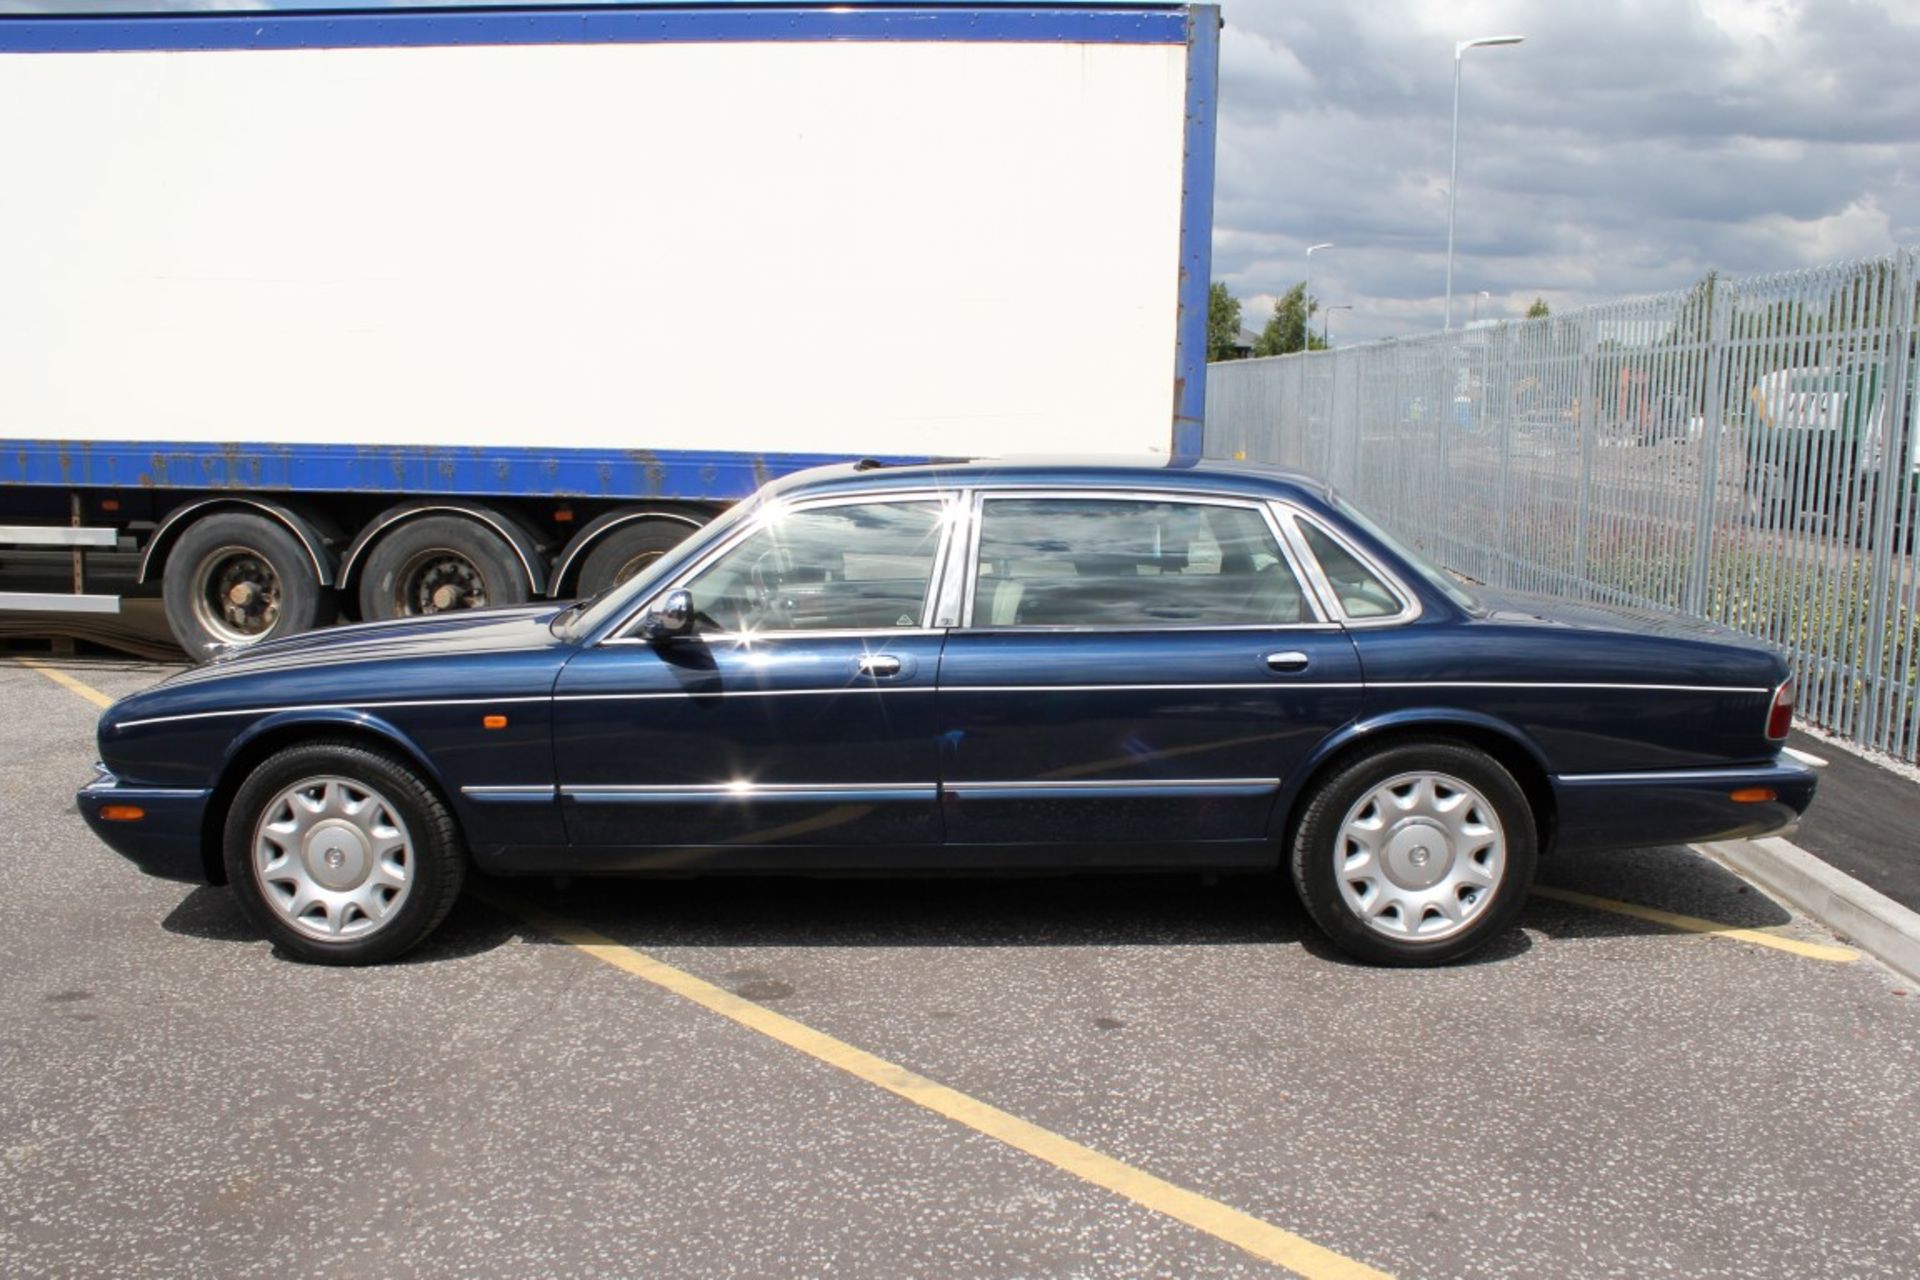 1 x Jaguar Daimler Super V8 Auto 4-Door Saloon - Year 2001 - Blue - Odometer Reading 122,520 - MOT - Image 53 of 77